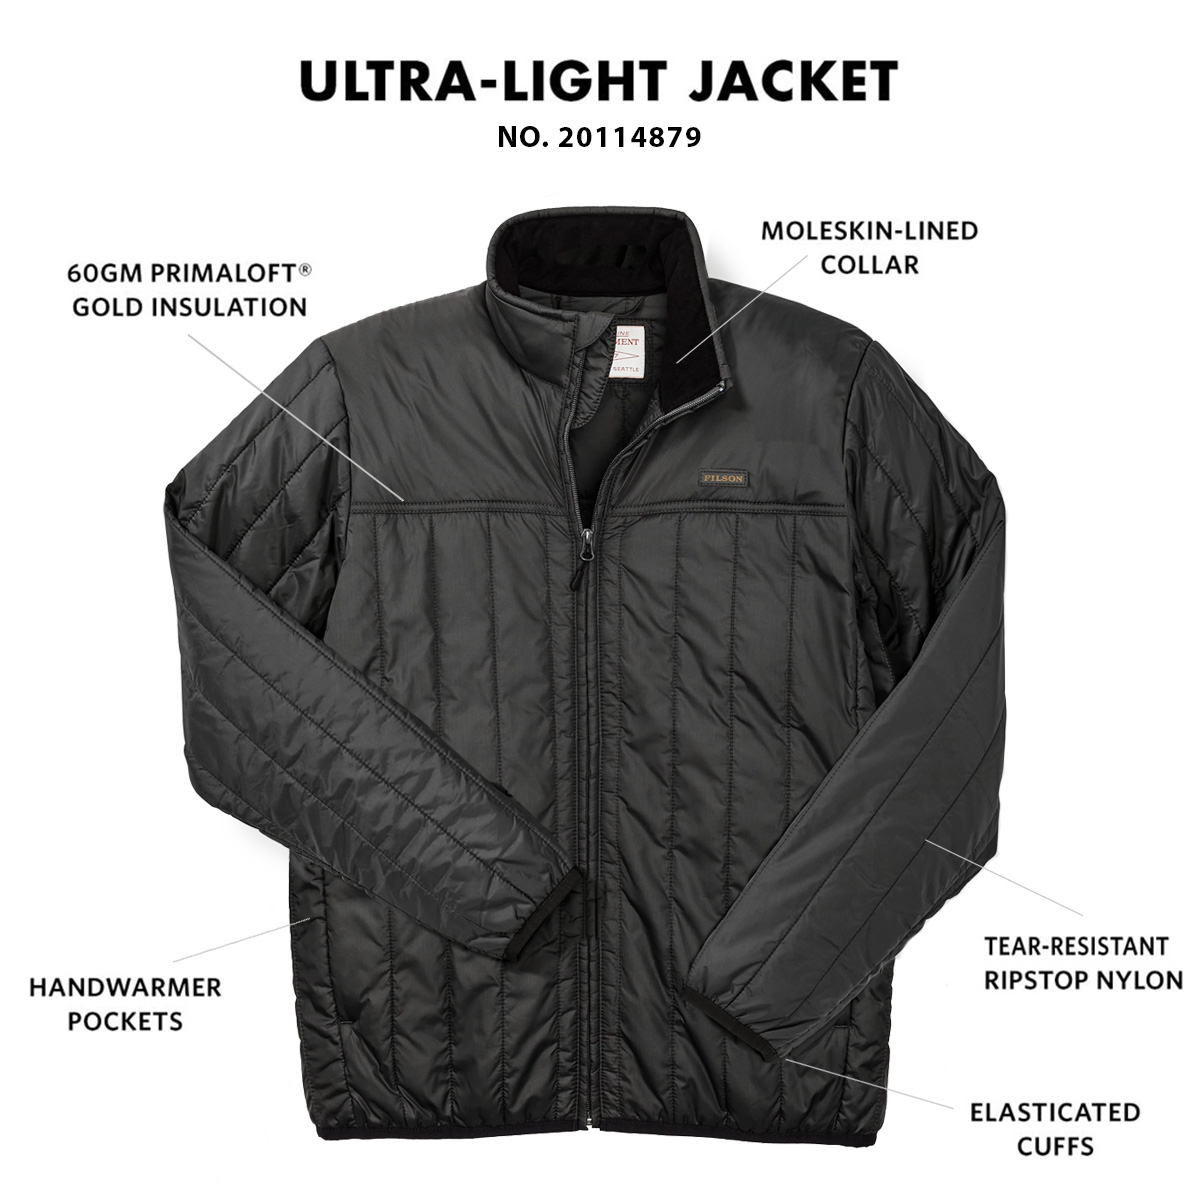 Filson Ultralight Jacket Raven, with Cordura® Ripstop nylon and 60gm PrimaLoft® Gold insulation